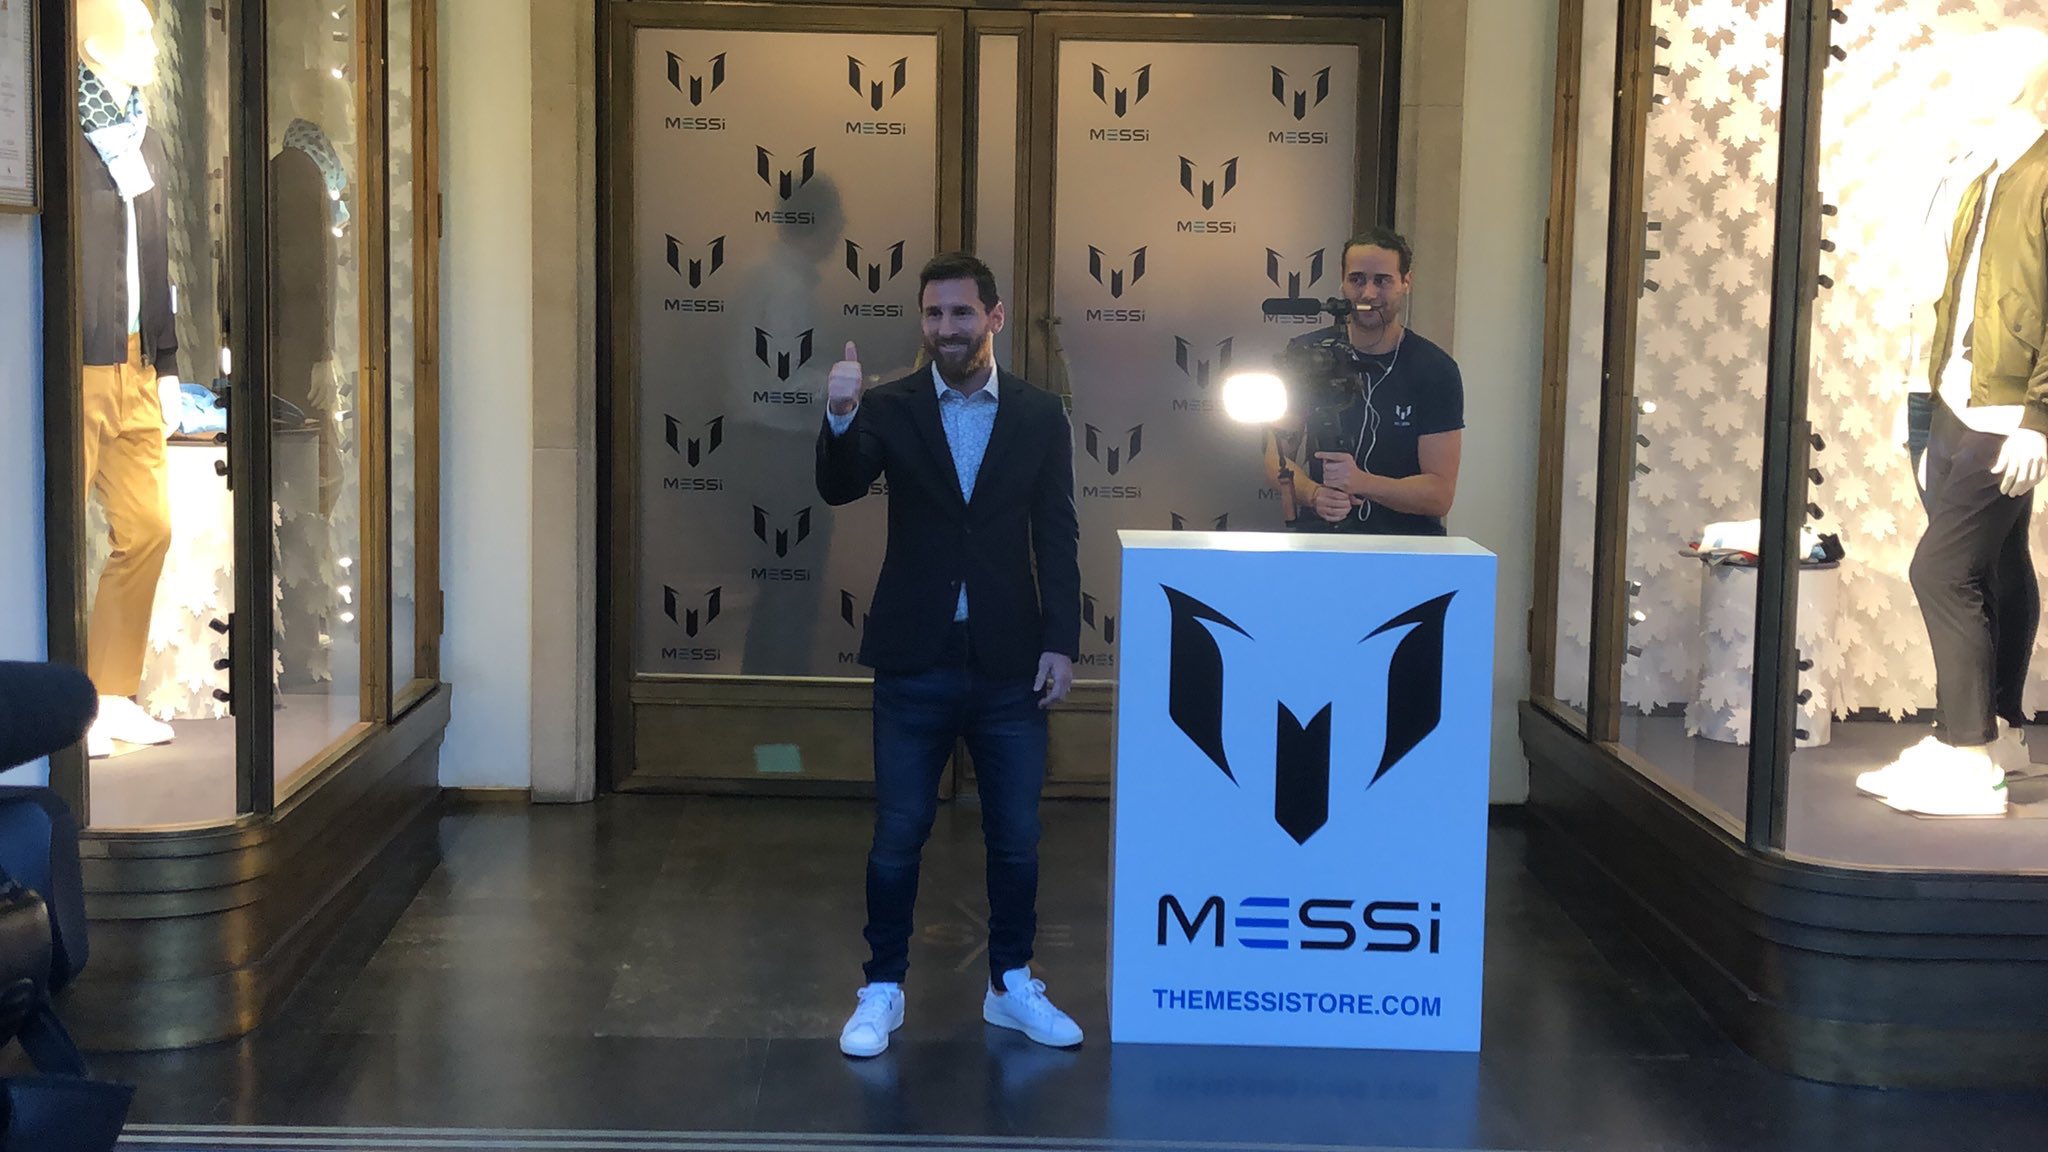 Caroline Kerkbank spectrum Leo Messi 🔟 Fan Club on Twitter: "#Messi during the launch of his store in  Barcelona 😍 #themessistore #WeAreMessi https://t.co/kHMAaEg7uy" / Twitter